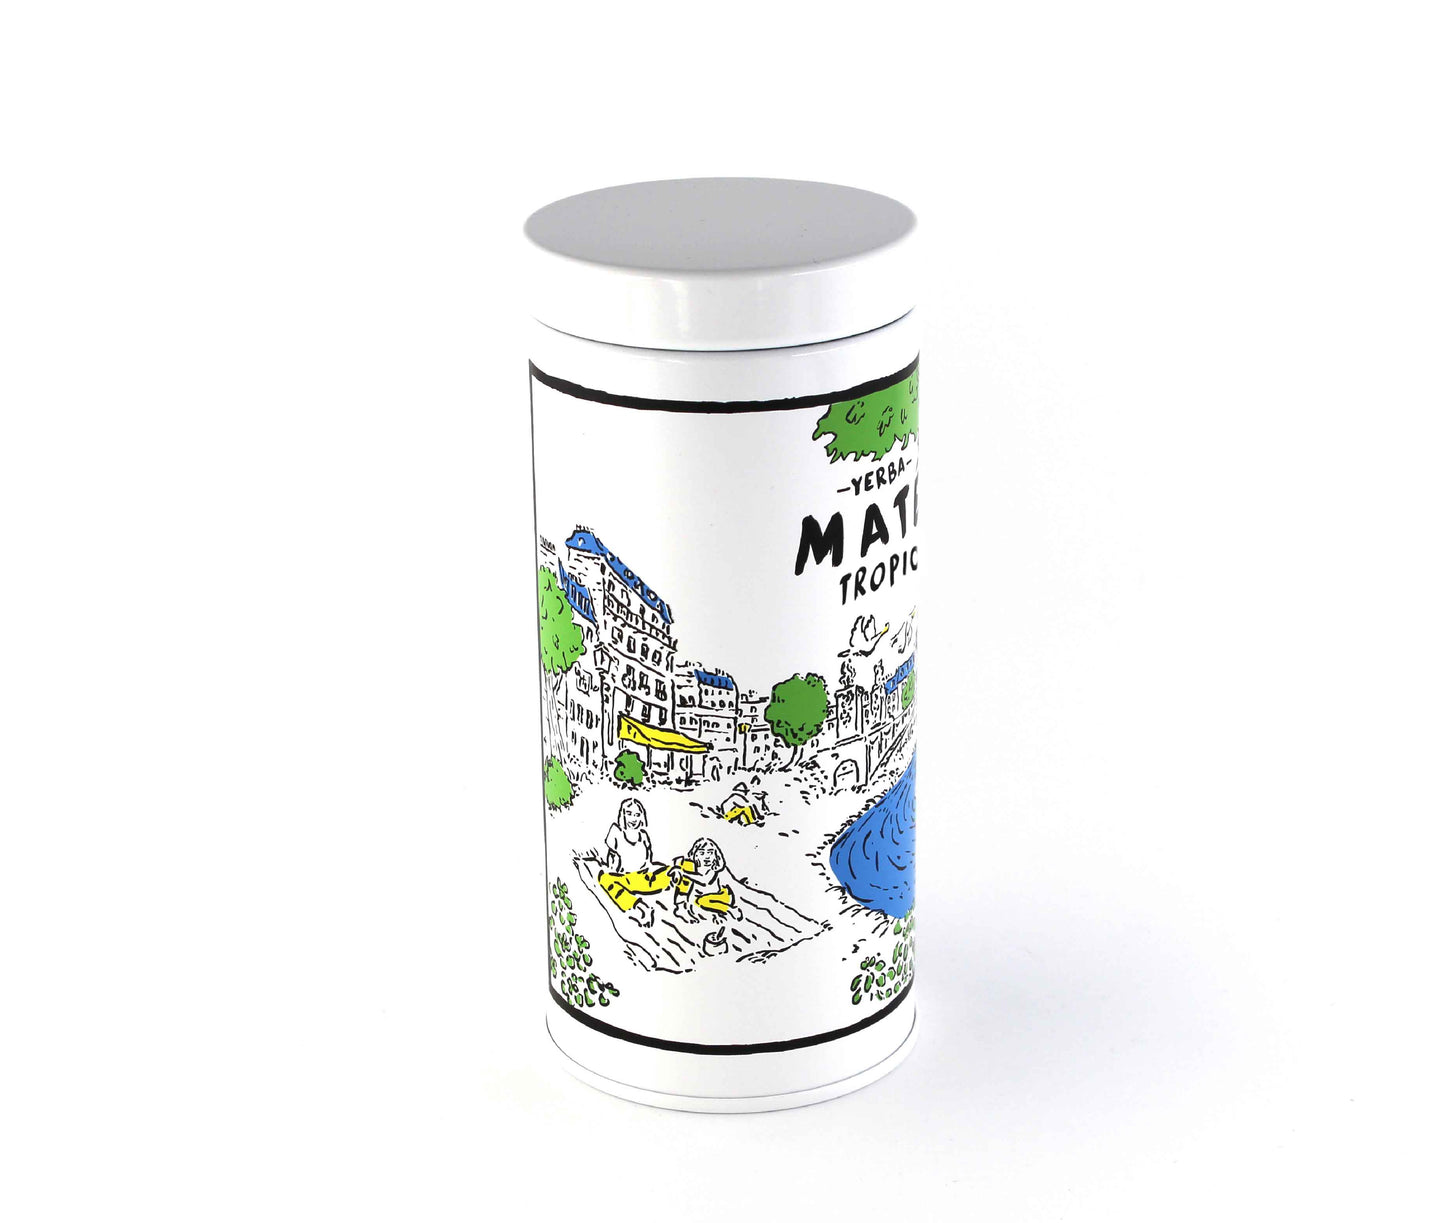 YVY MATÉ - Maté Tropical Bio - Boîte en fer blanc 100g - xavieralcoolsansalcool